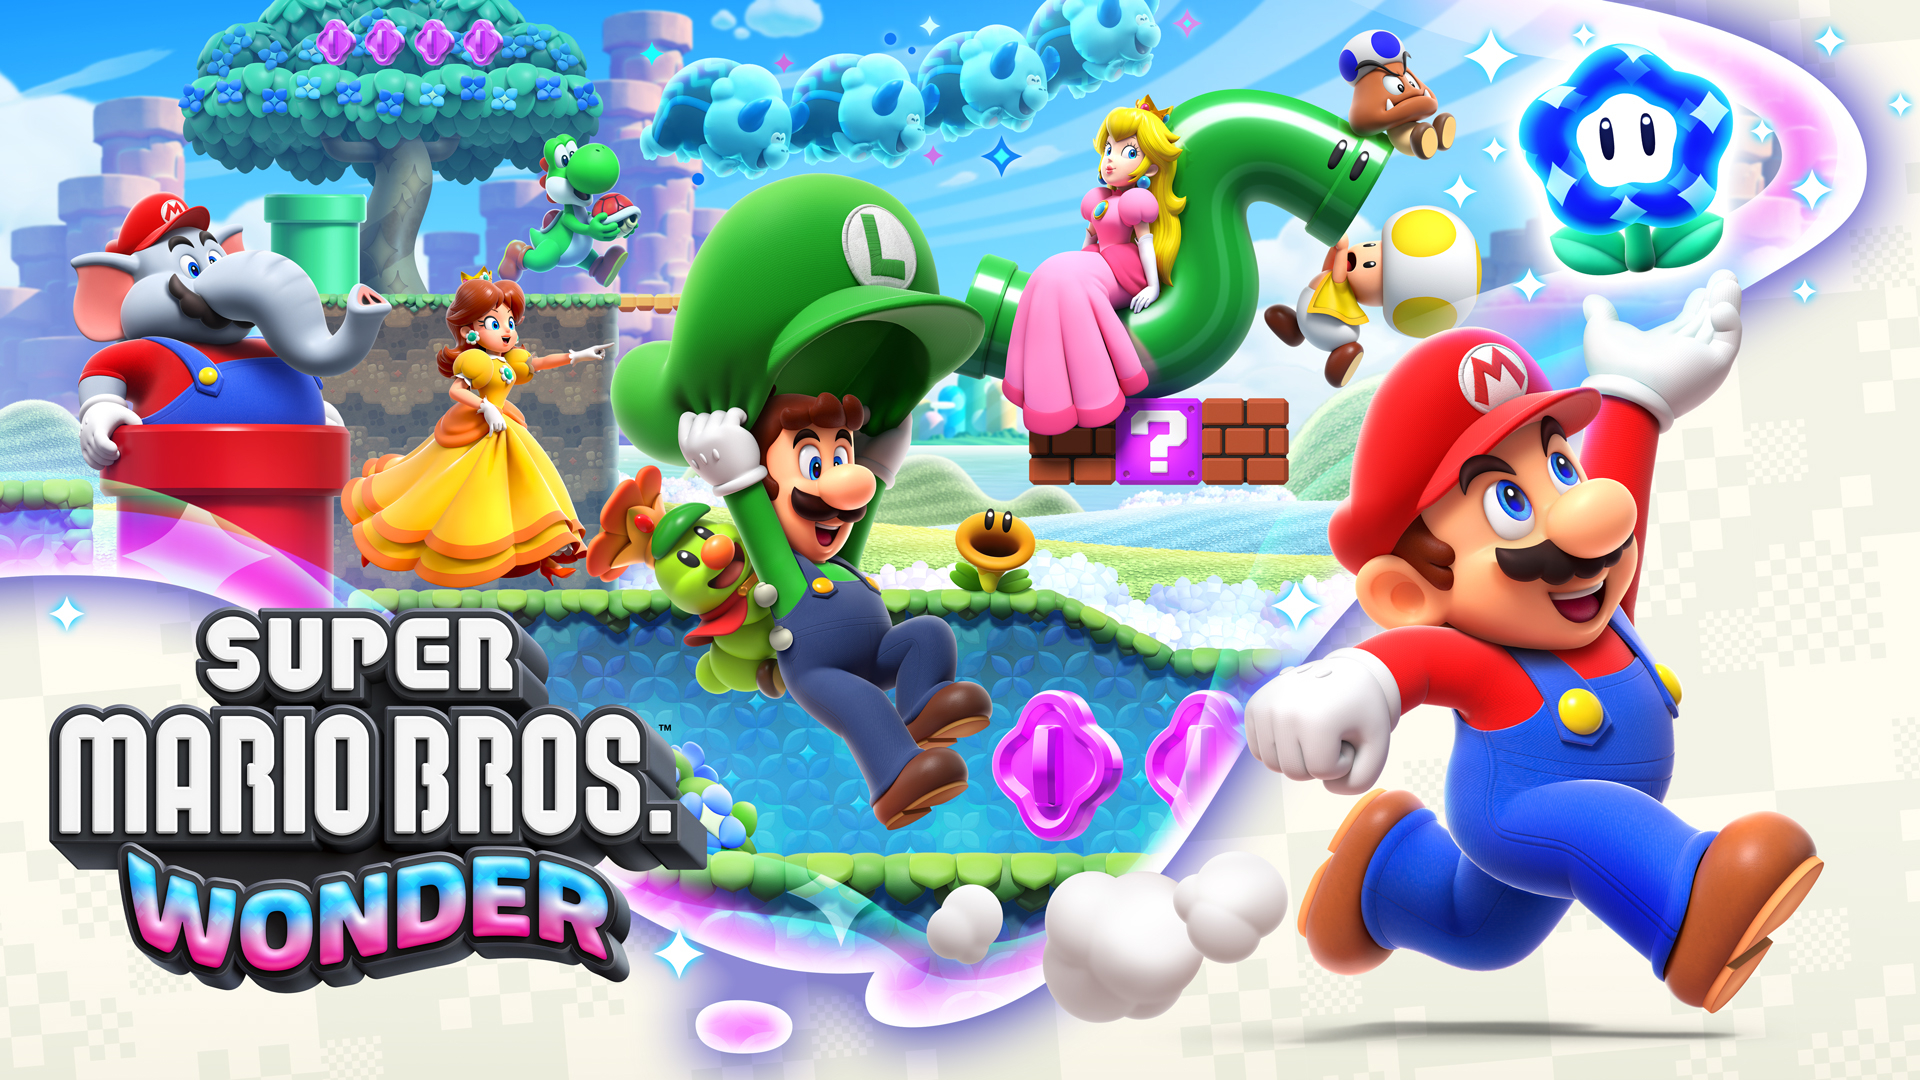 768x1280 Super Mario Bros Wonder HD Gaming 768x1280 Resolution ...